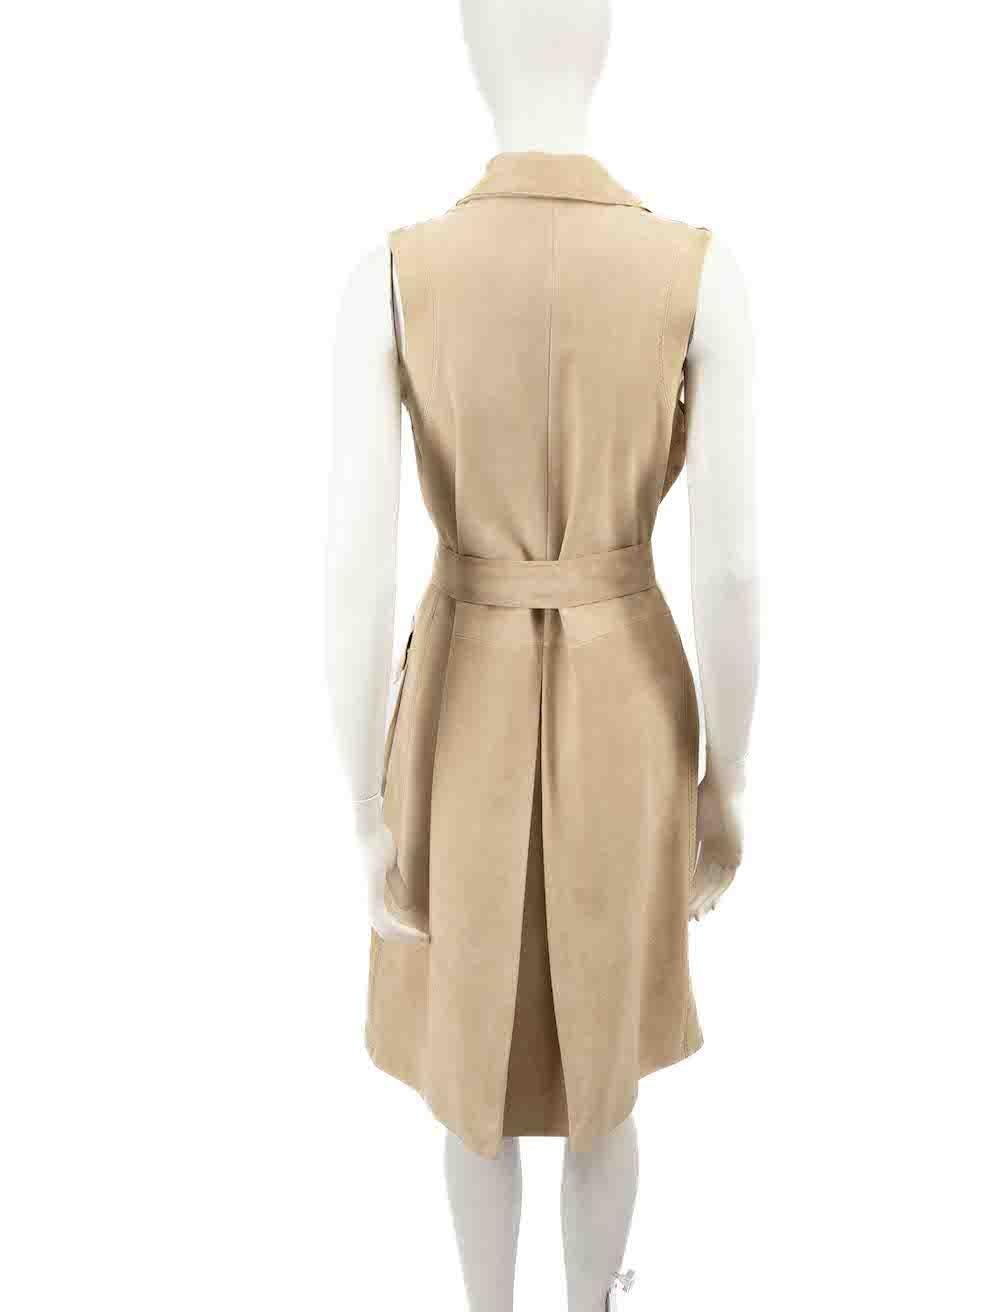 J.Mendel Beige Suede Pocket Detail Long Vest Size S In Good Condition For Sale In London, GB